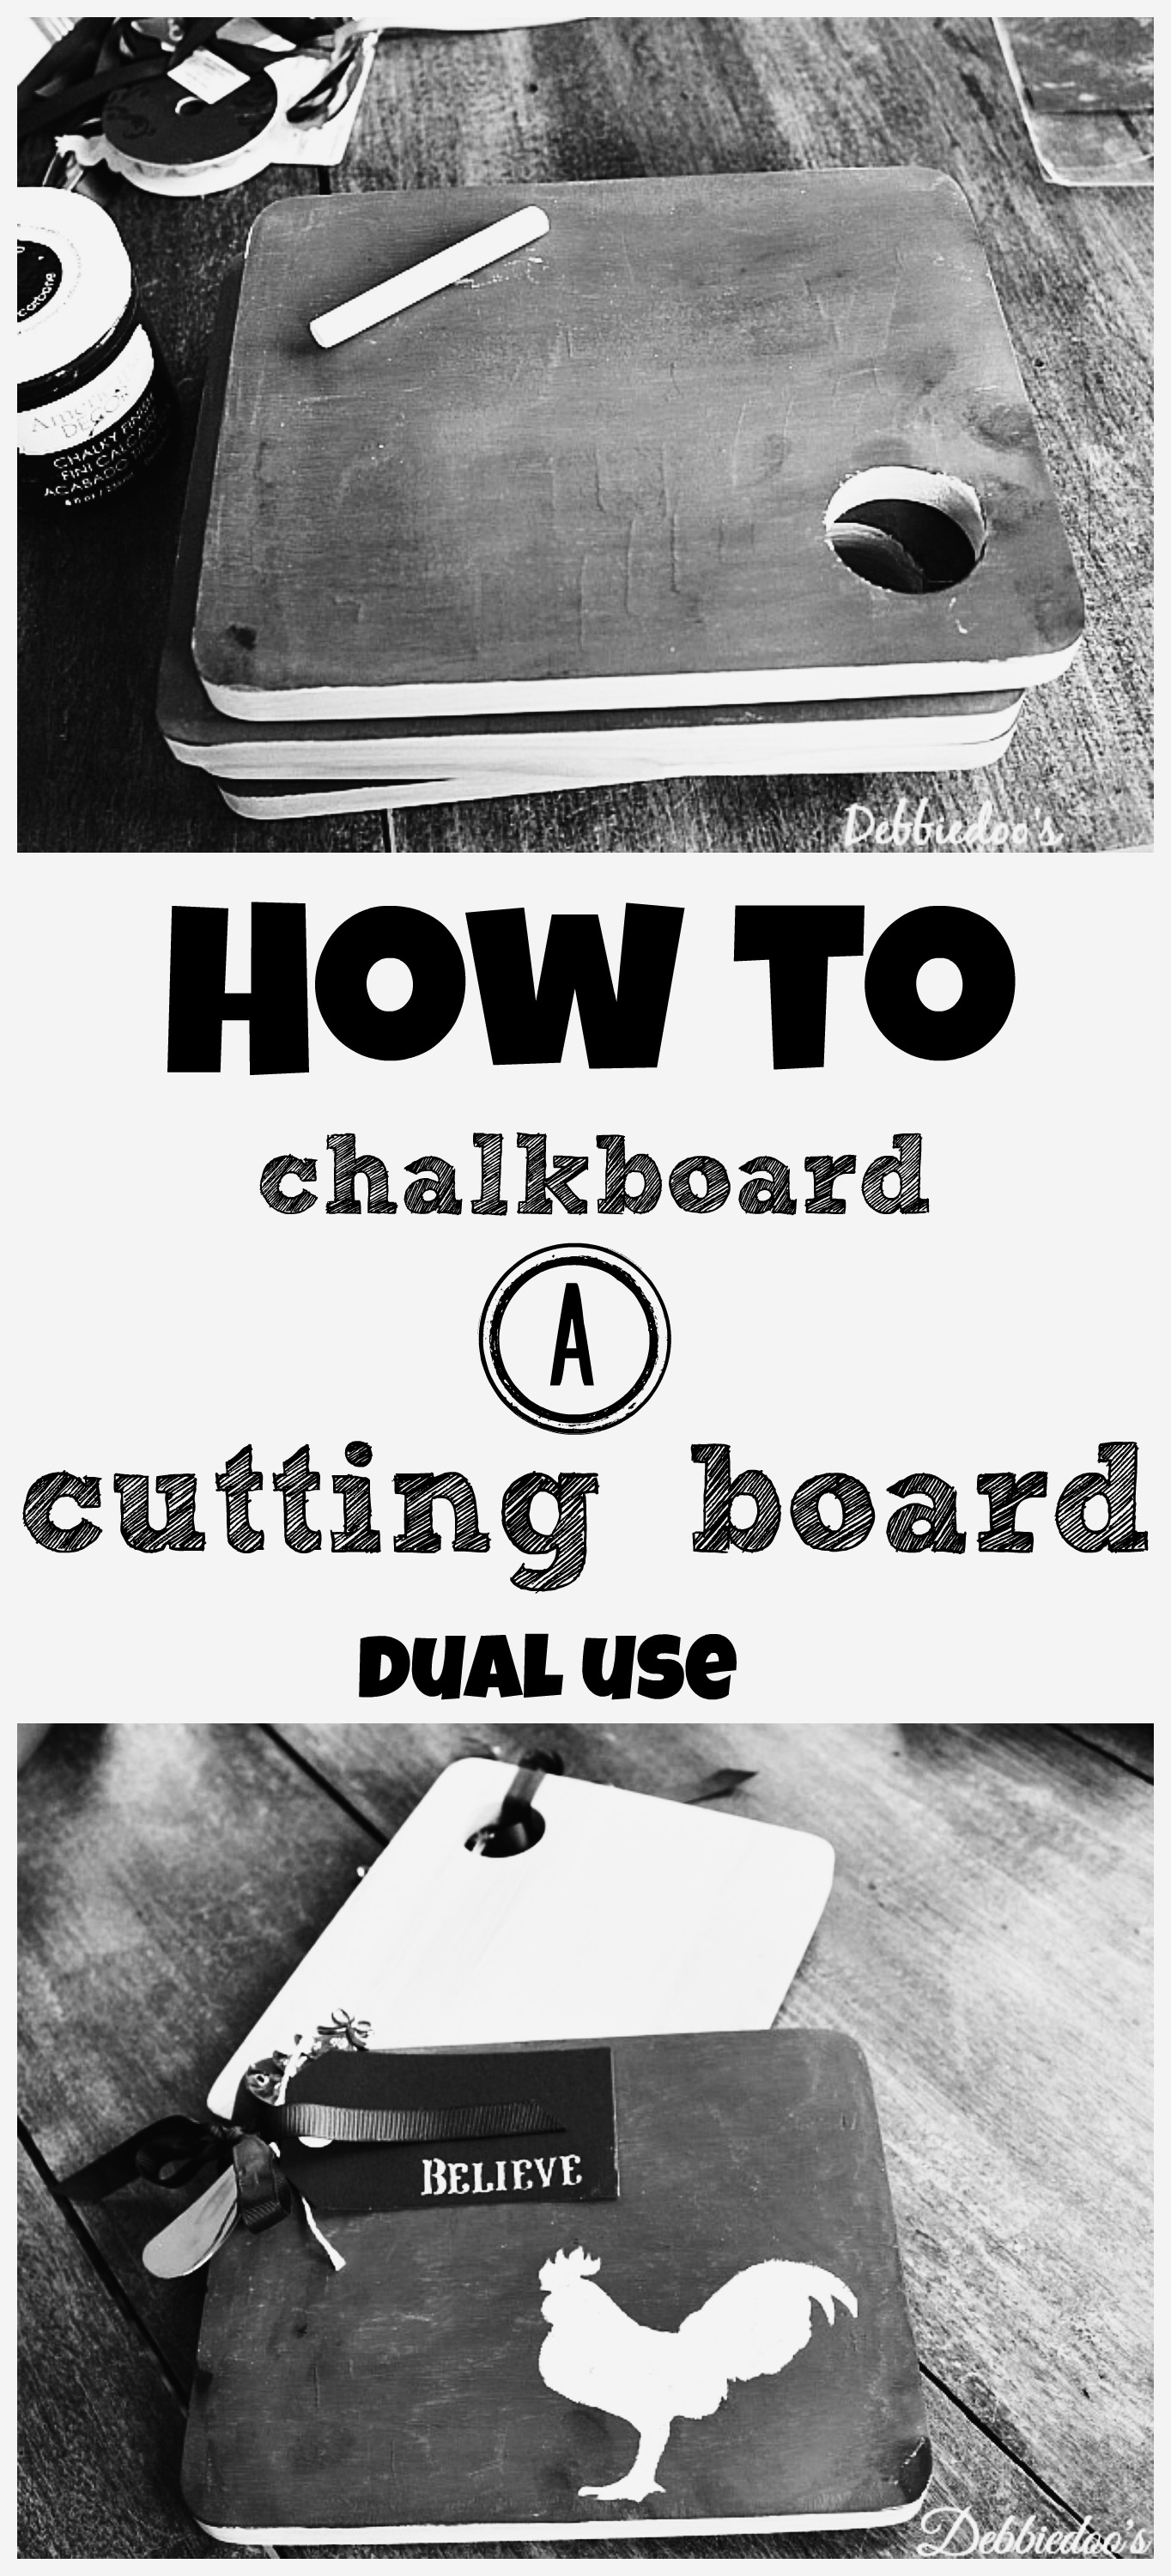 How to chalkboard a cutting board